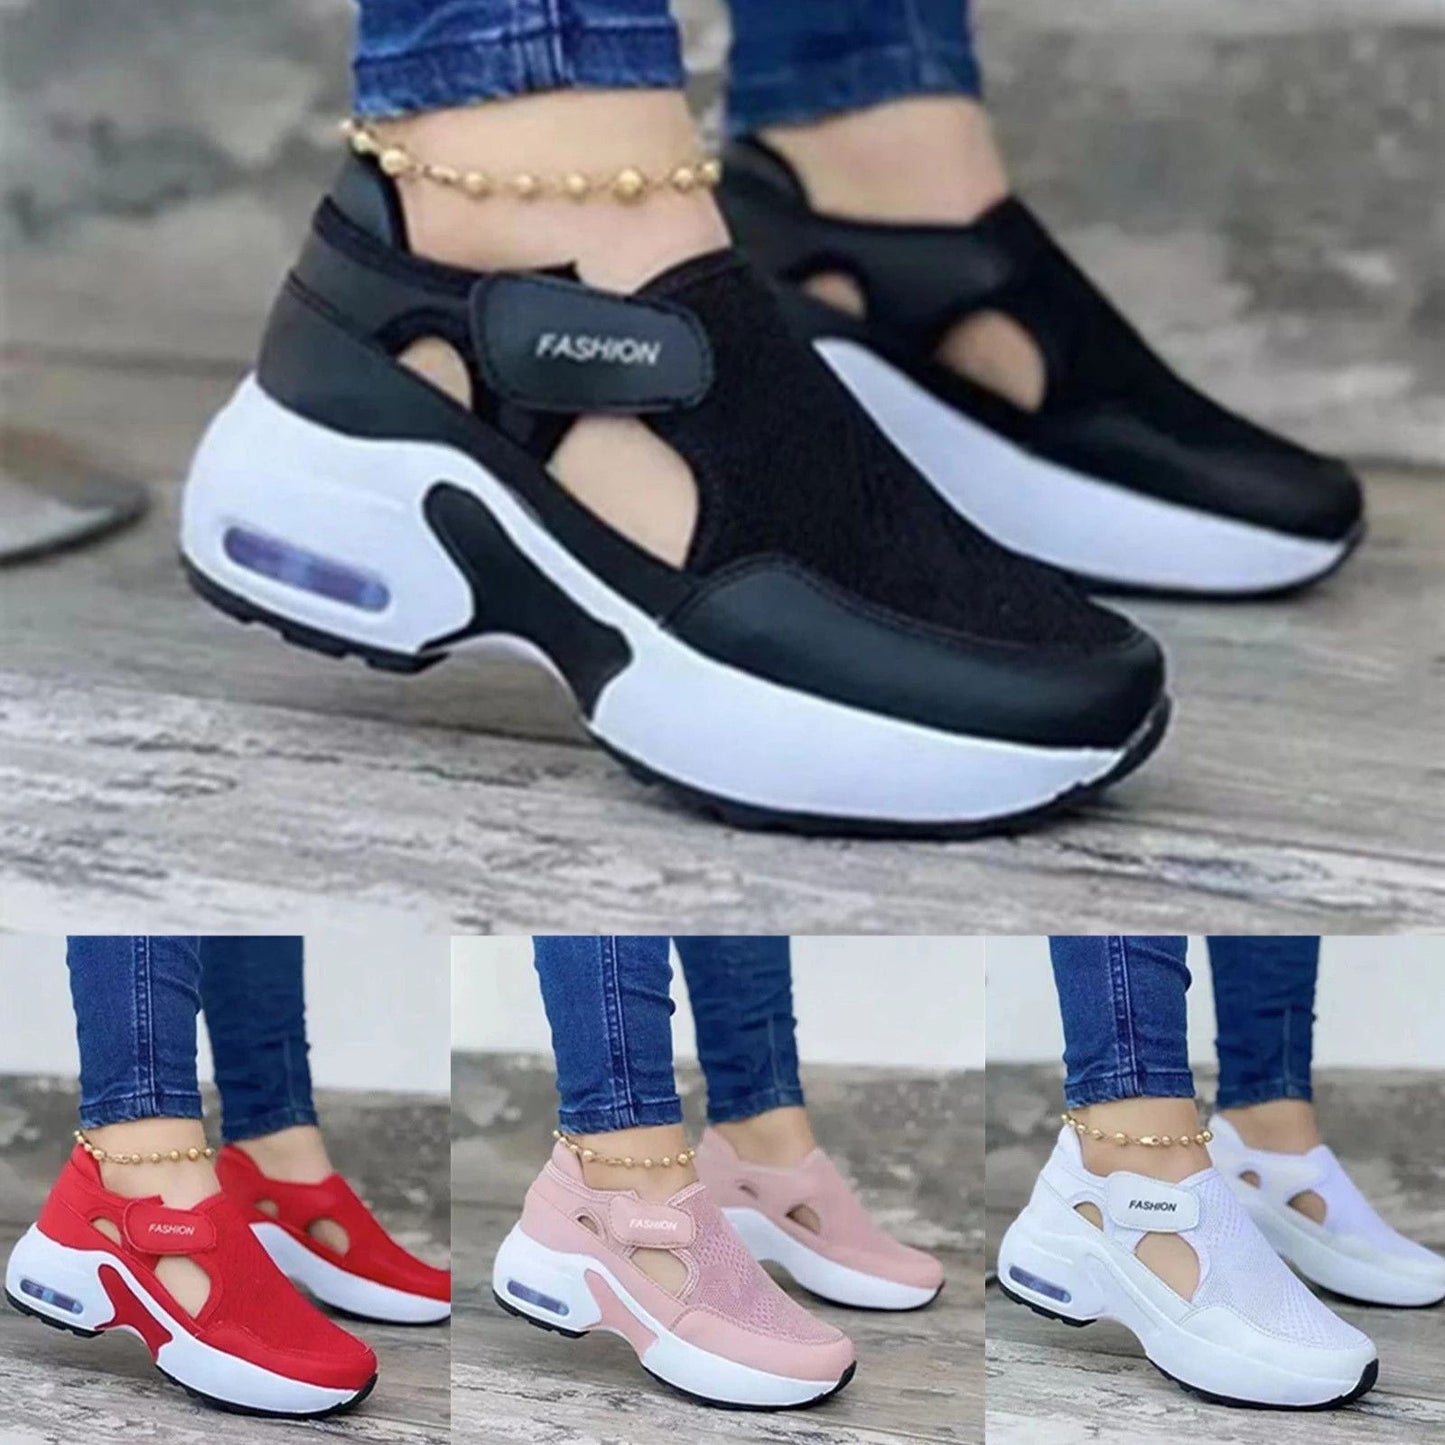 OCW Autumn Women's Fashion Breathable Comfortable Non-Slip Sneakers Shoes